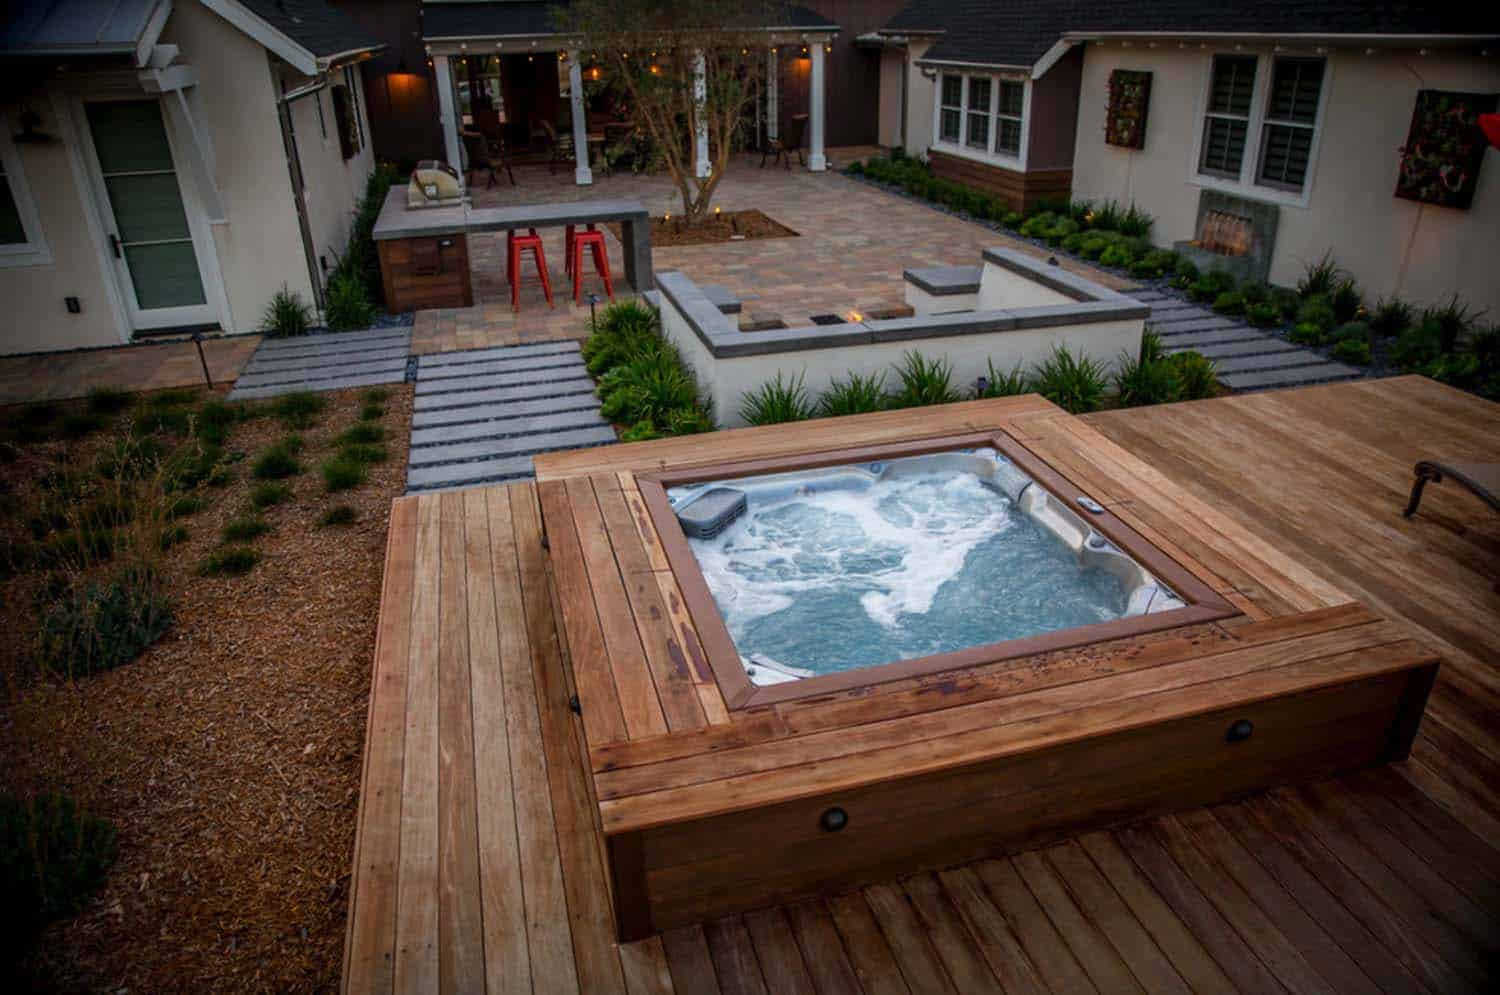 Hot Tub Backyard Ideas
 40 Outstanding Hot Tub Ideas To Create A Backyard Oasis